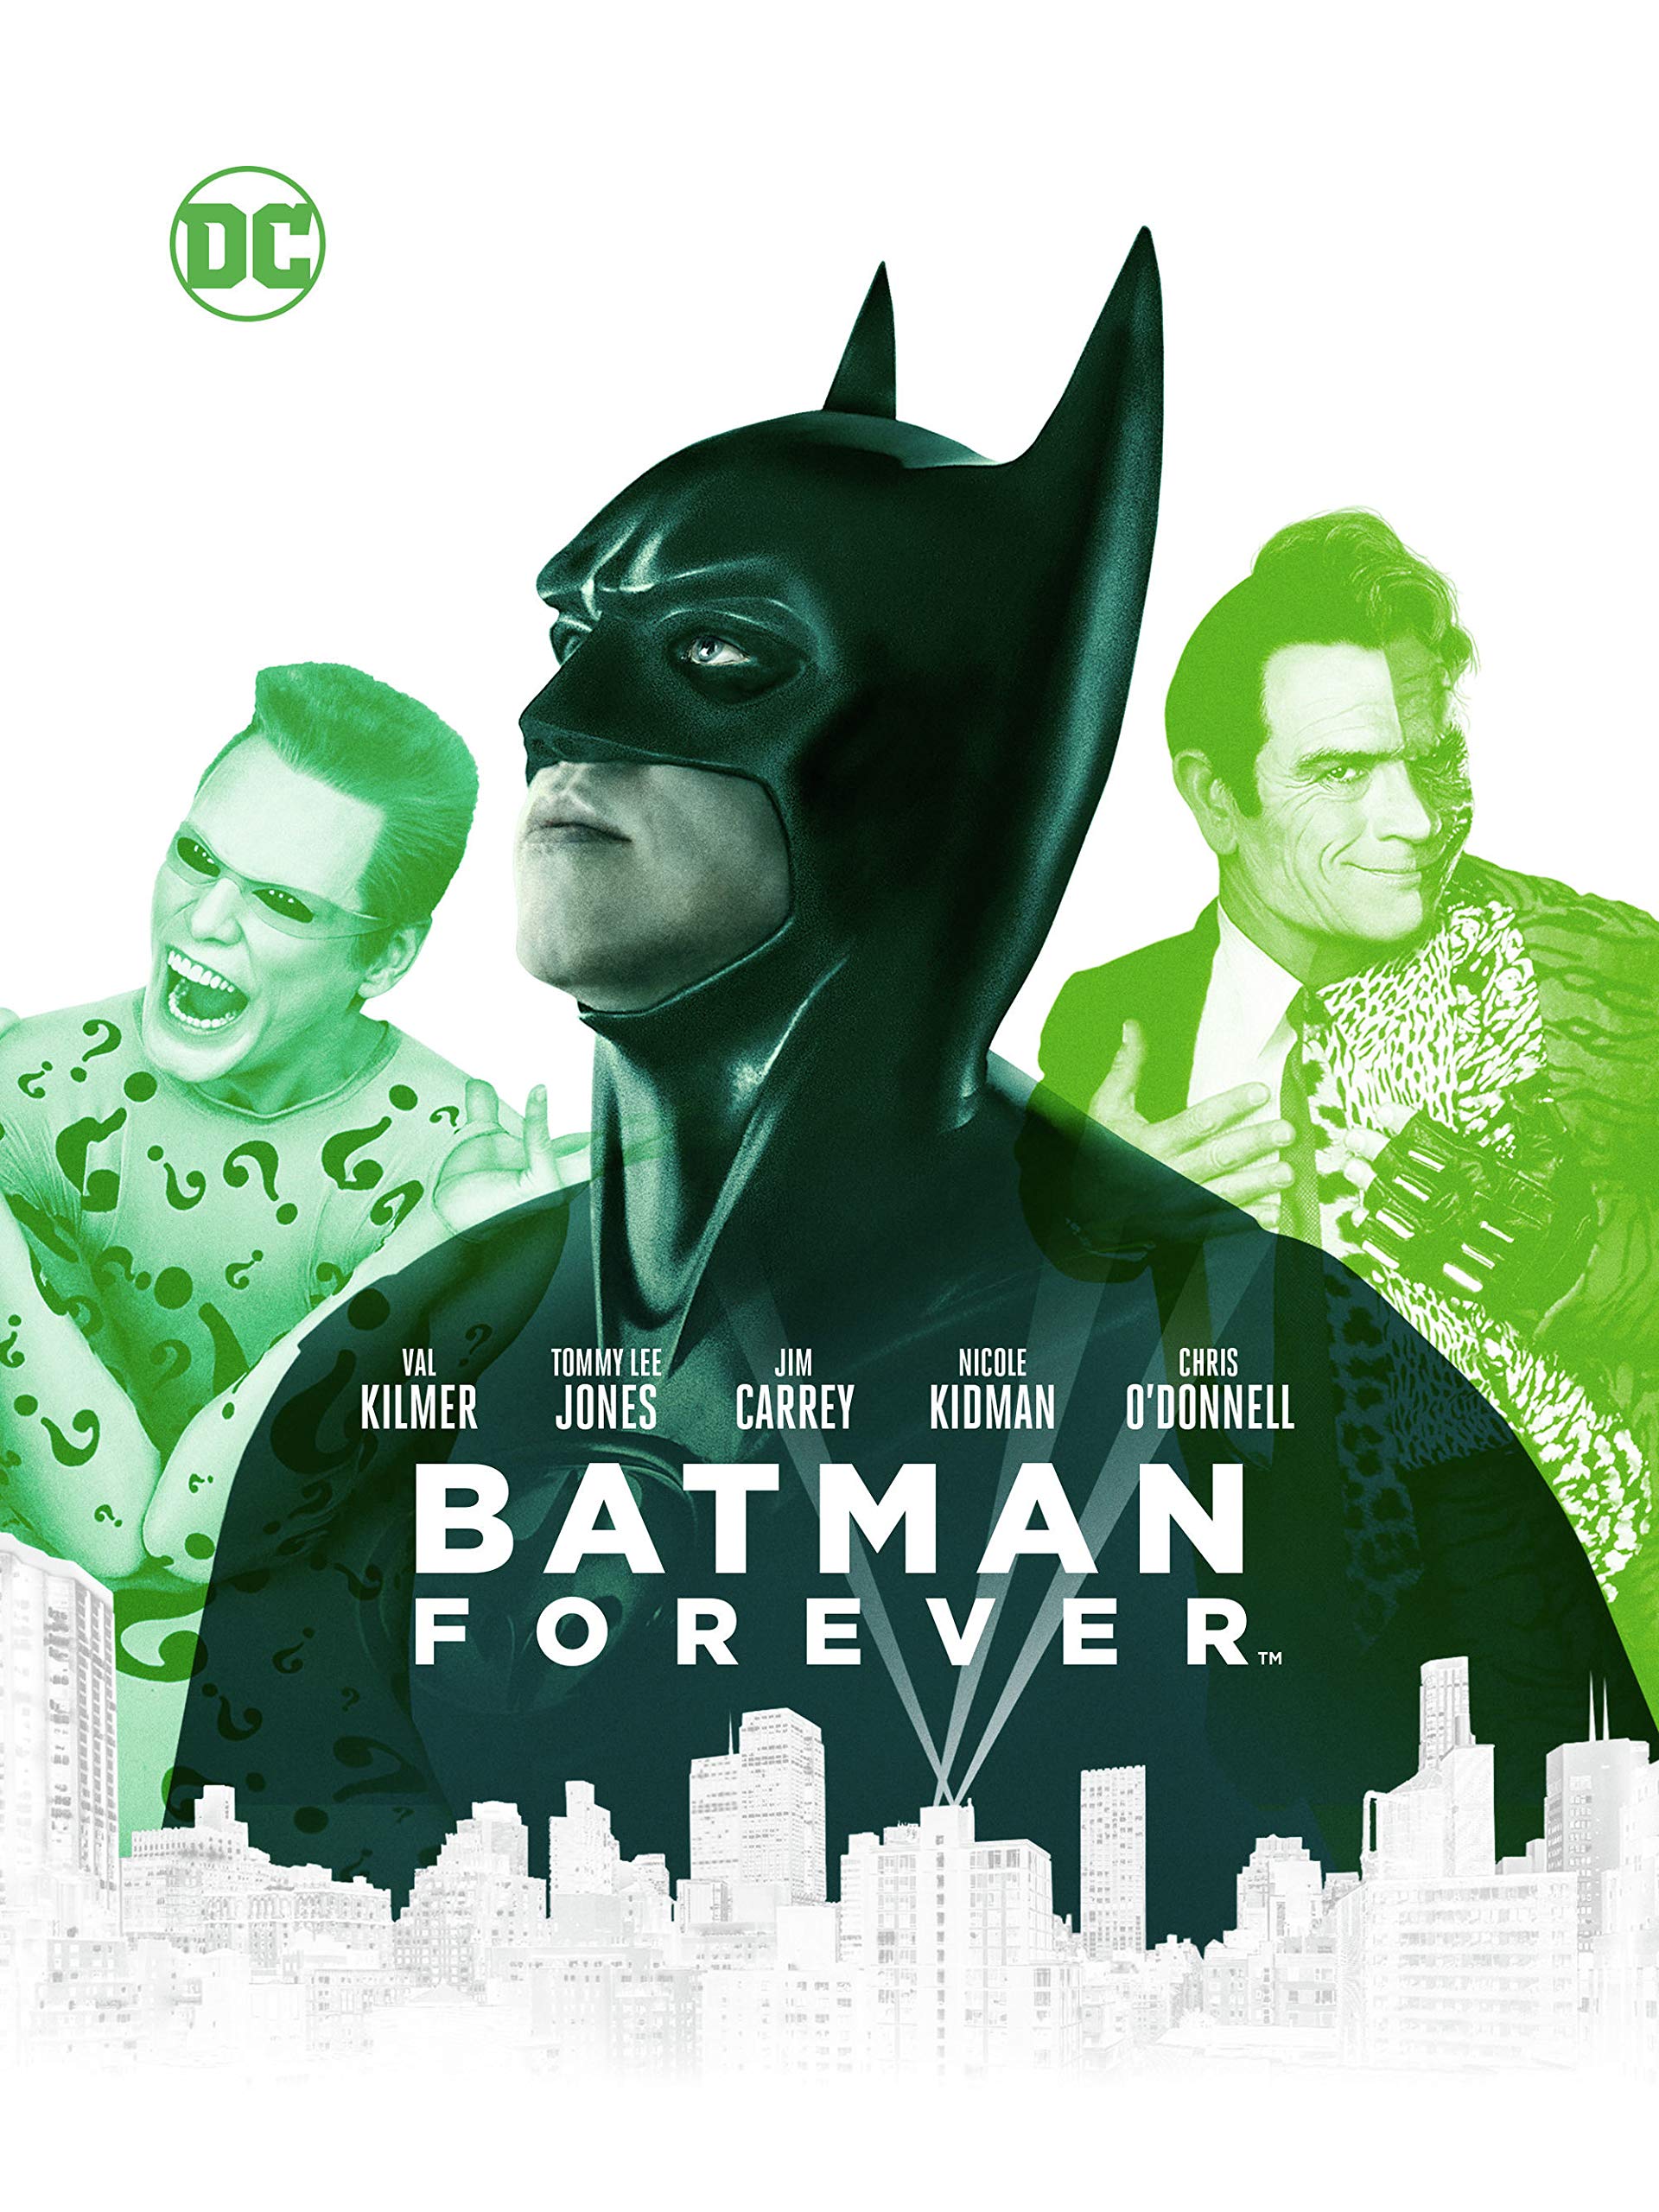 Batman Forever: Val Kilmer, Tommy Lee Jones, Jim Carrey, Nicole Kidman